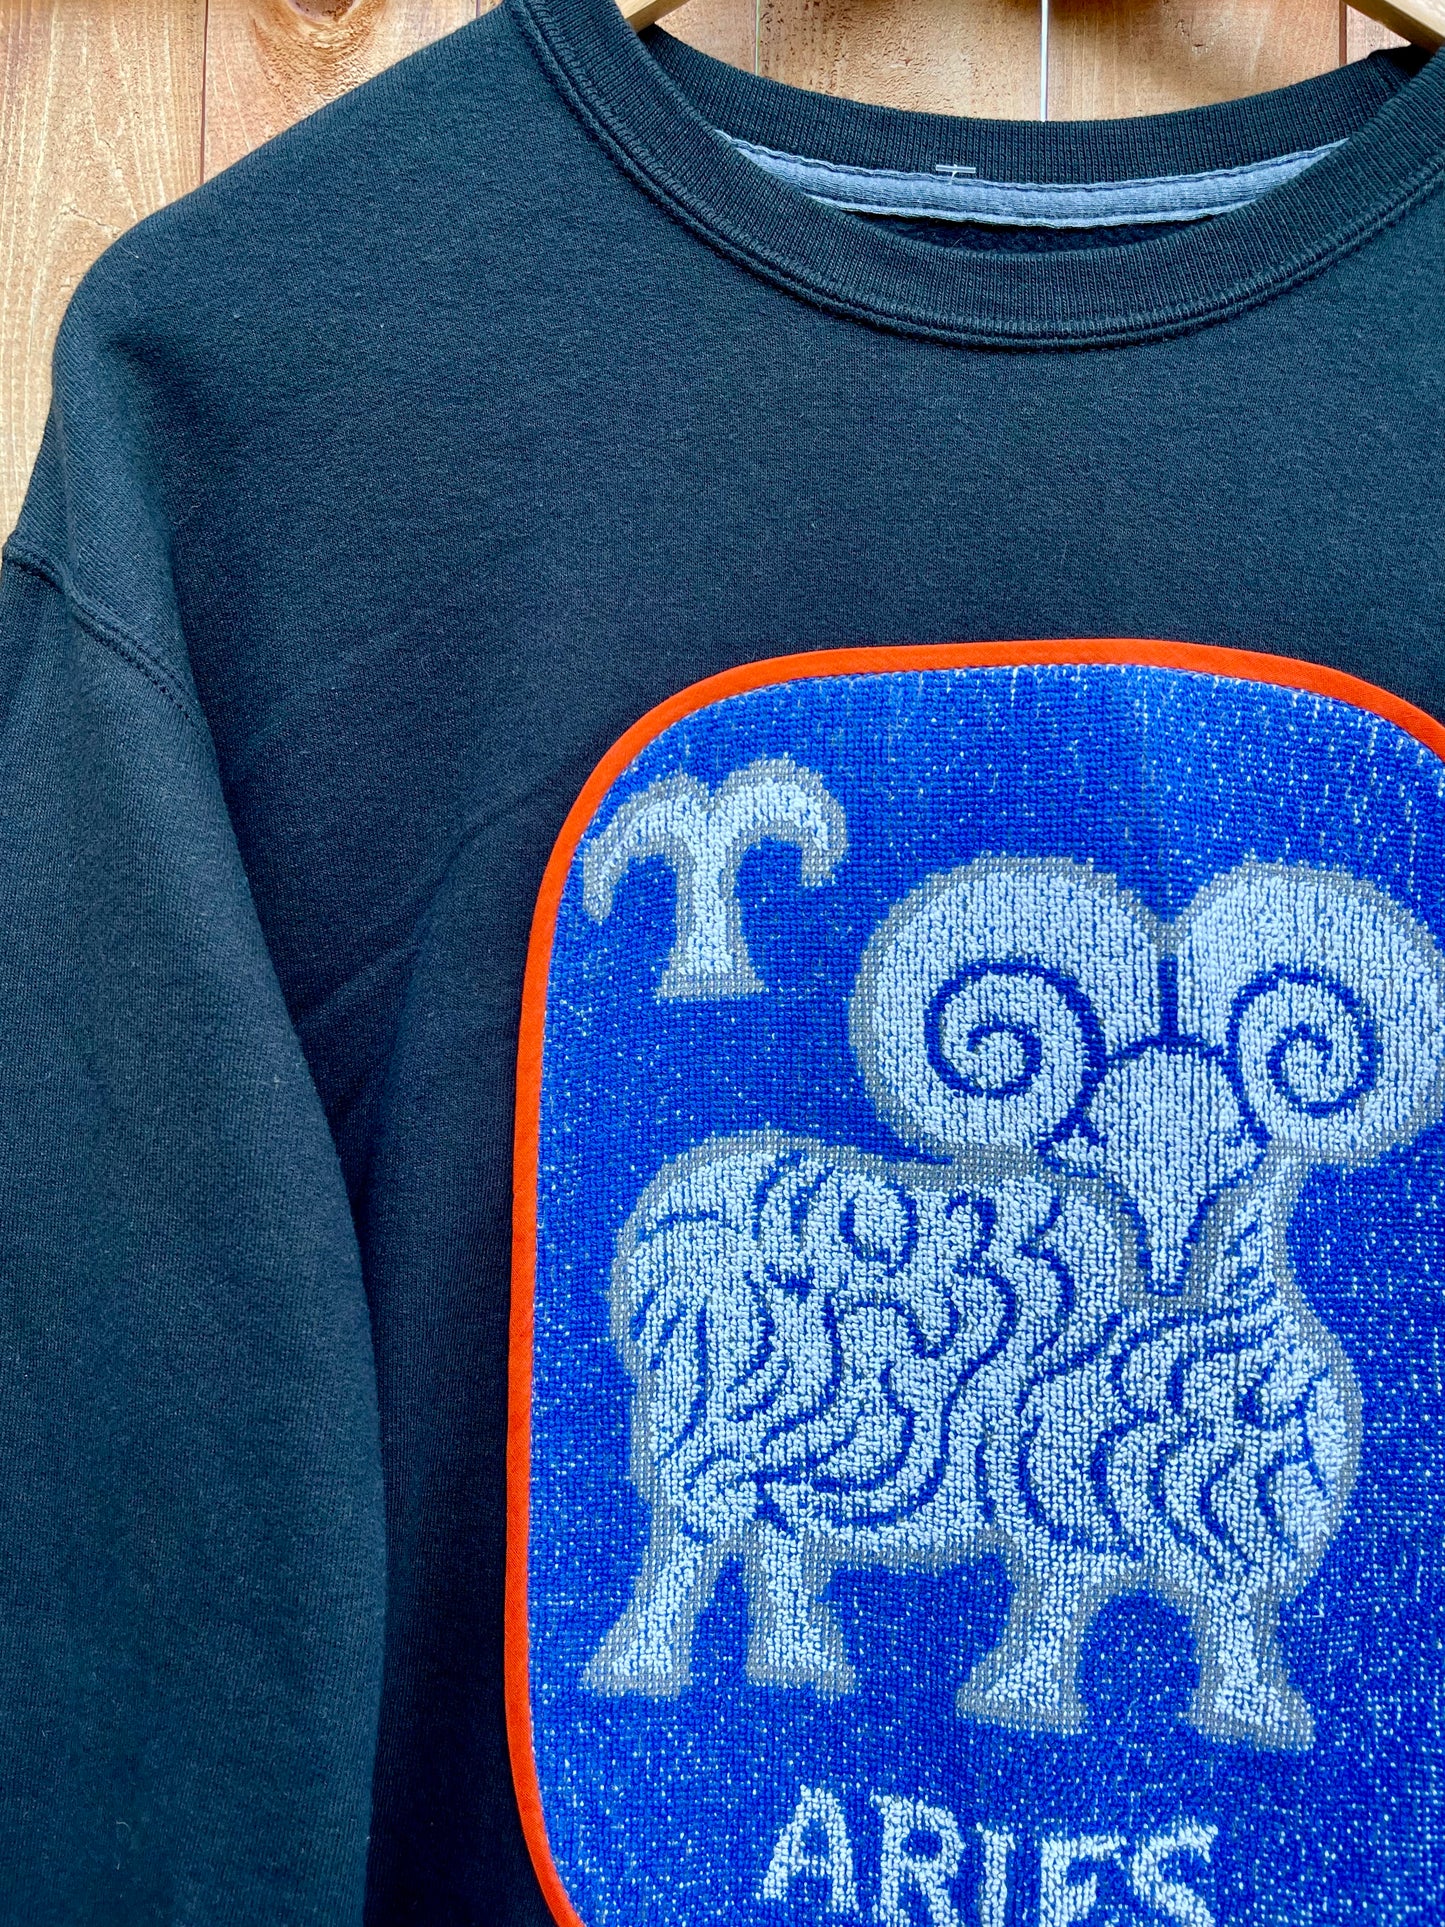 Zodiac sweatshirt, Aries S/M